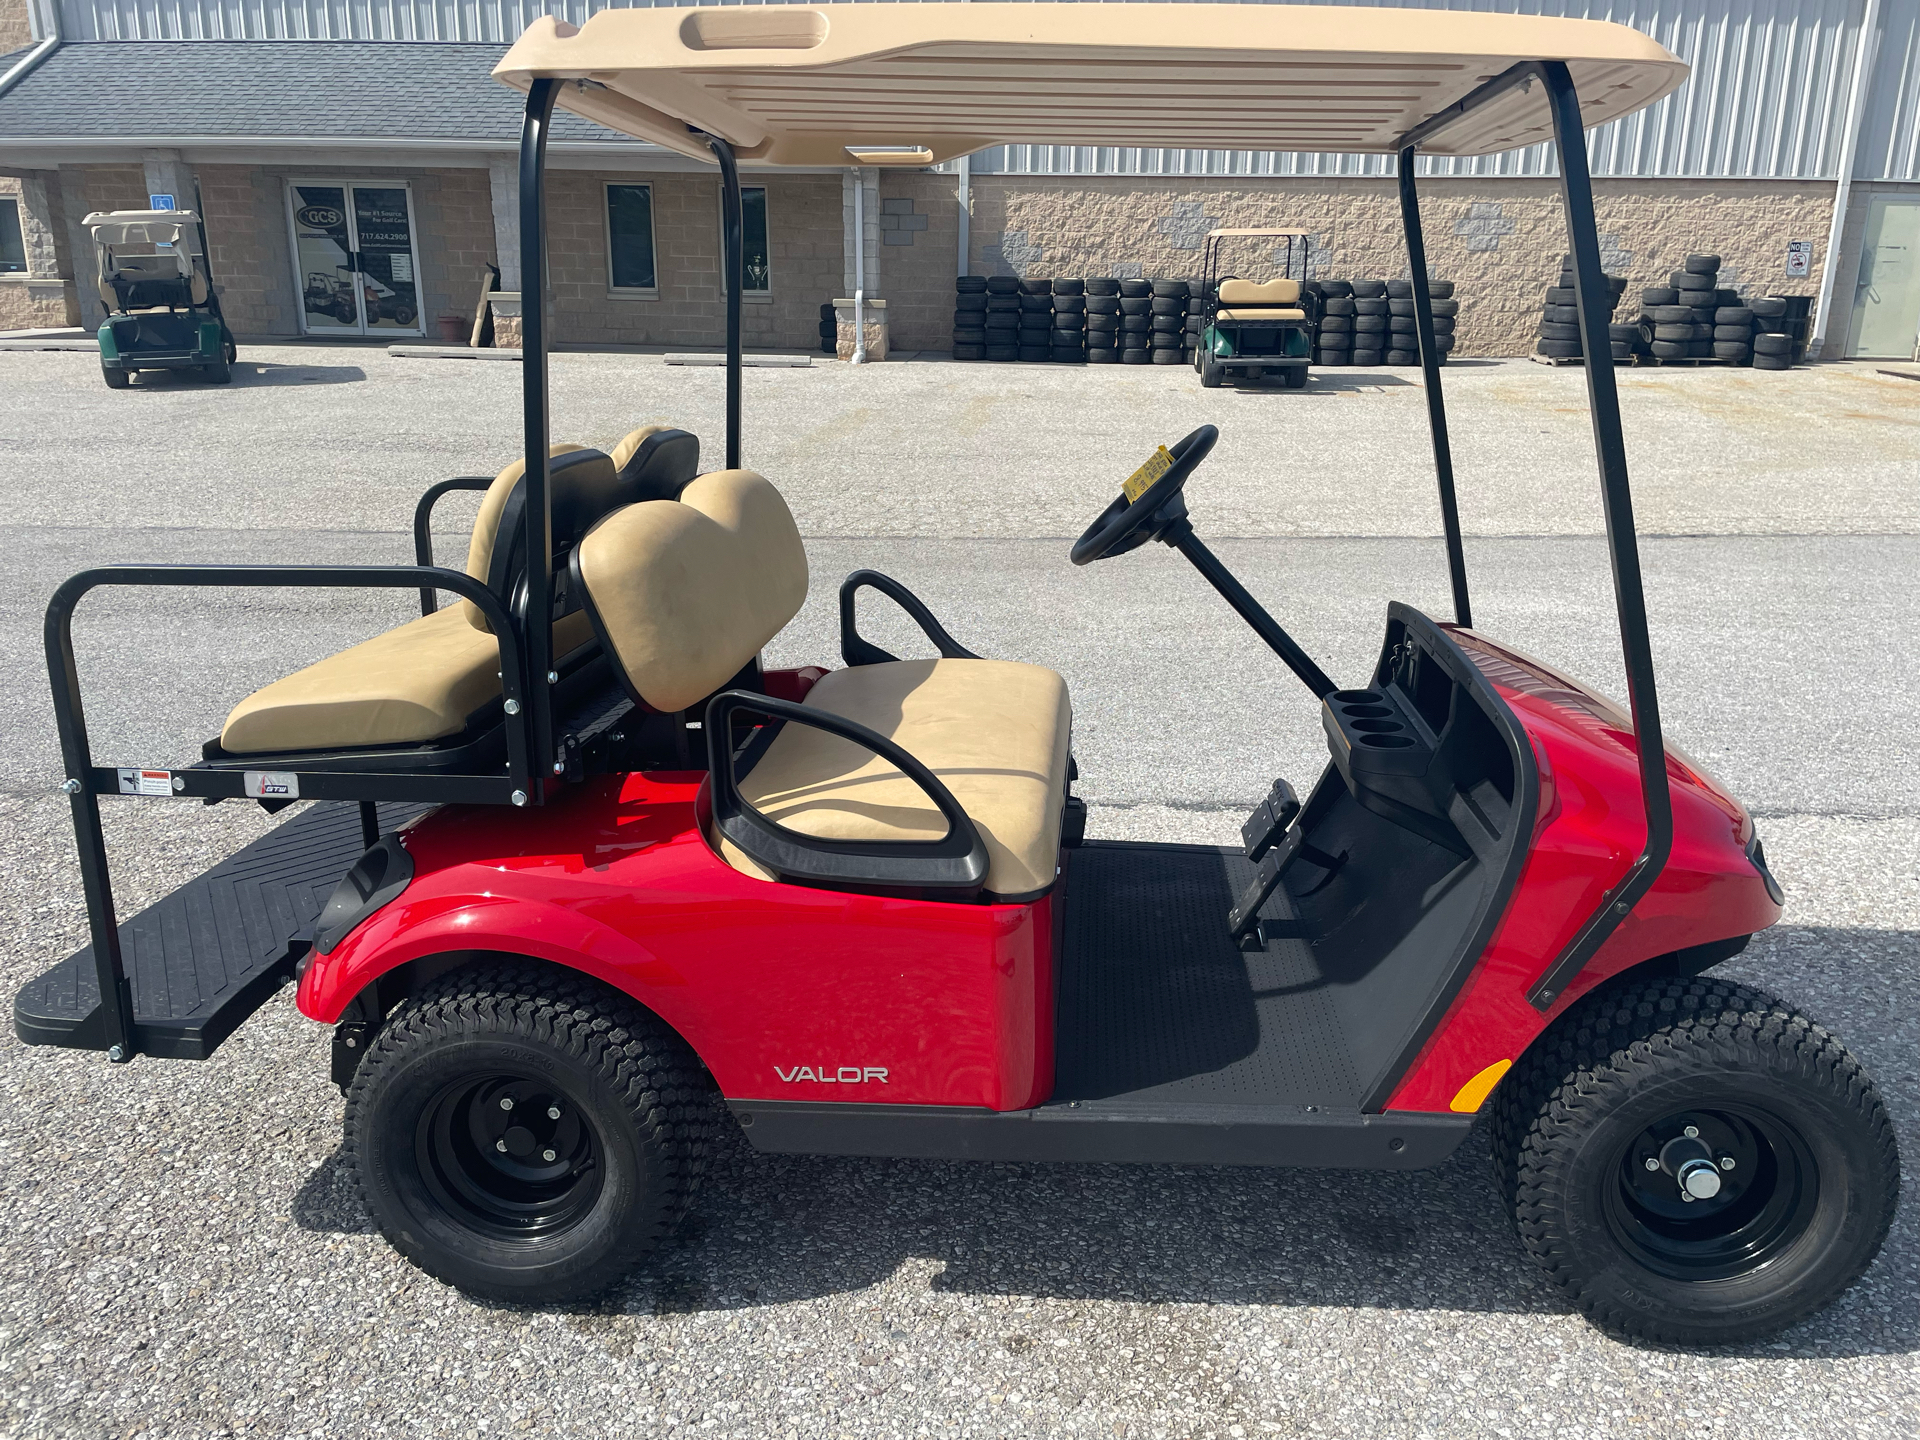 2022 E-Z-GO TXT VALOR E Golf Carts New Oxford Pennsylvania